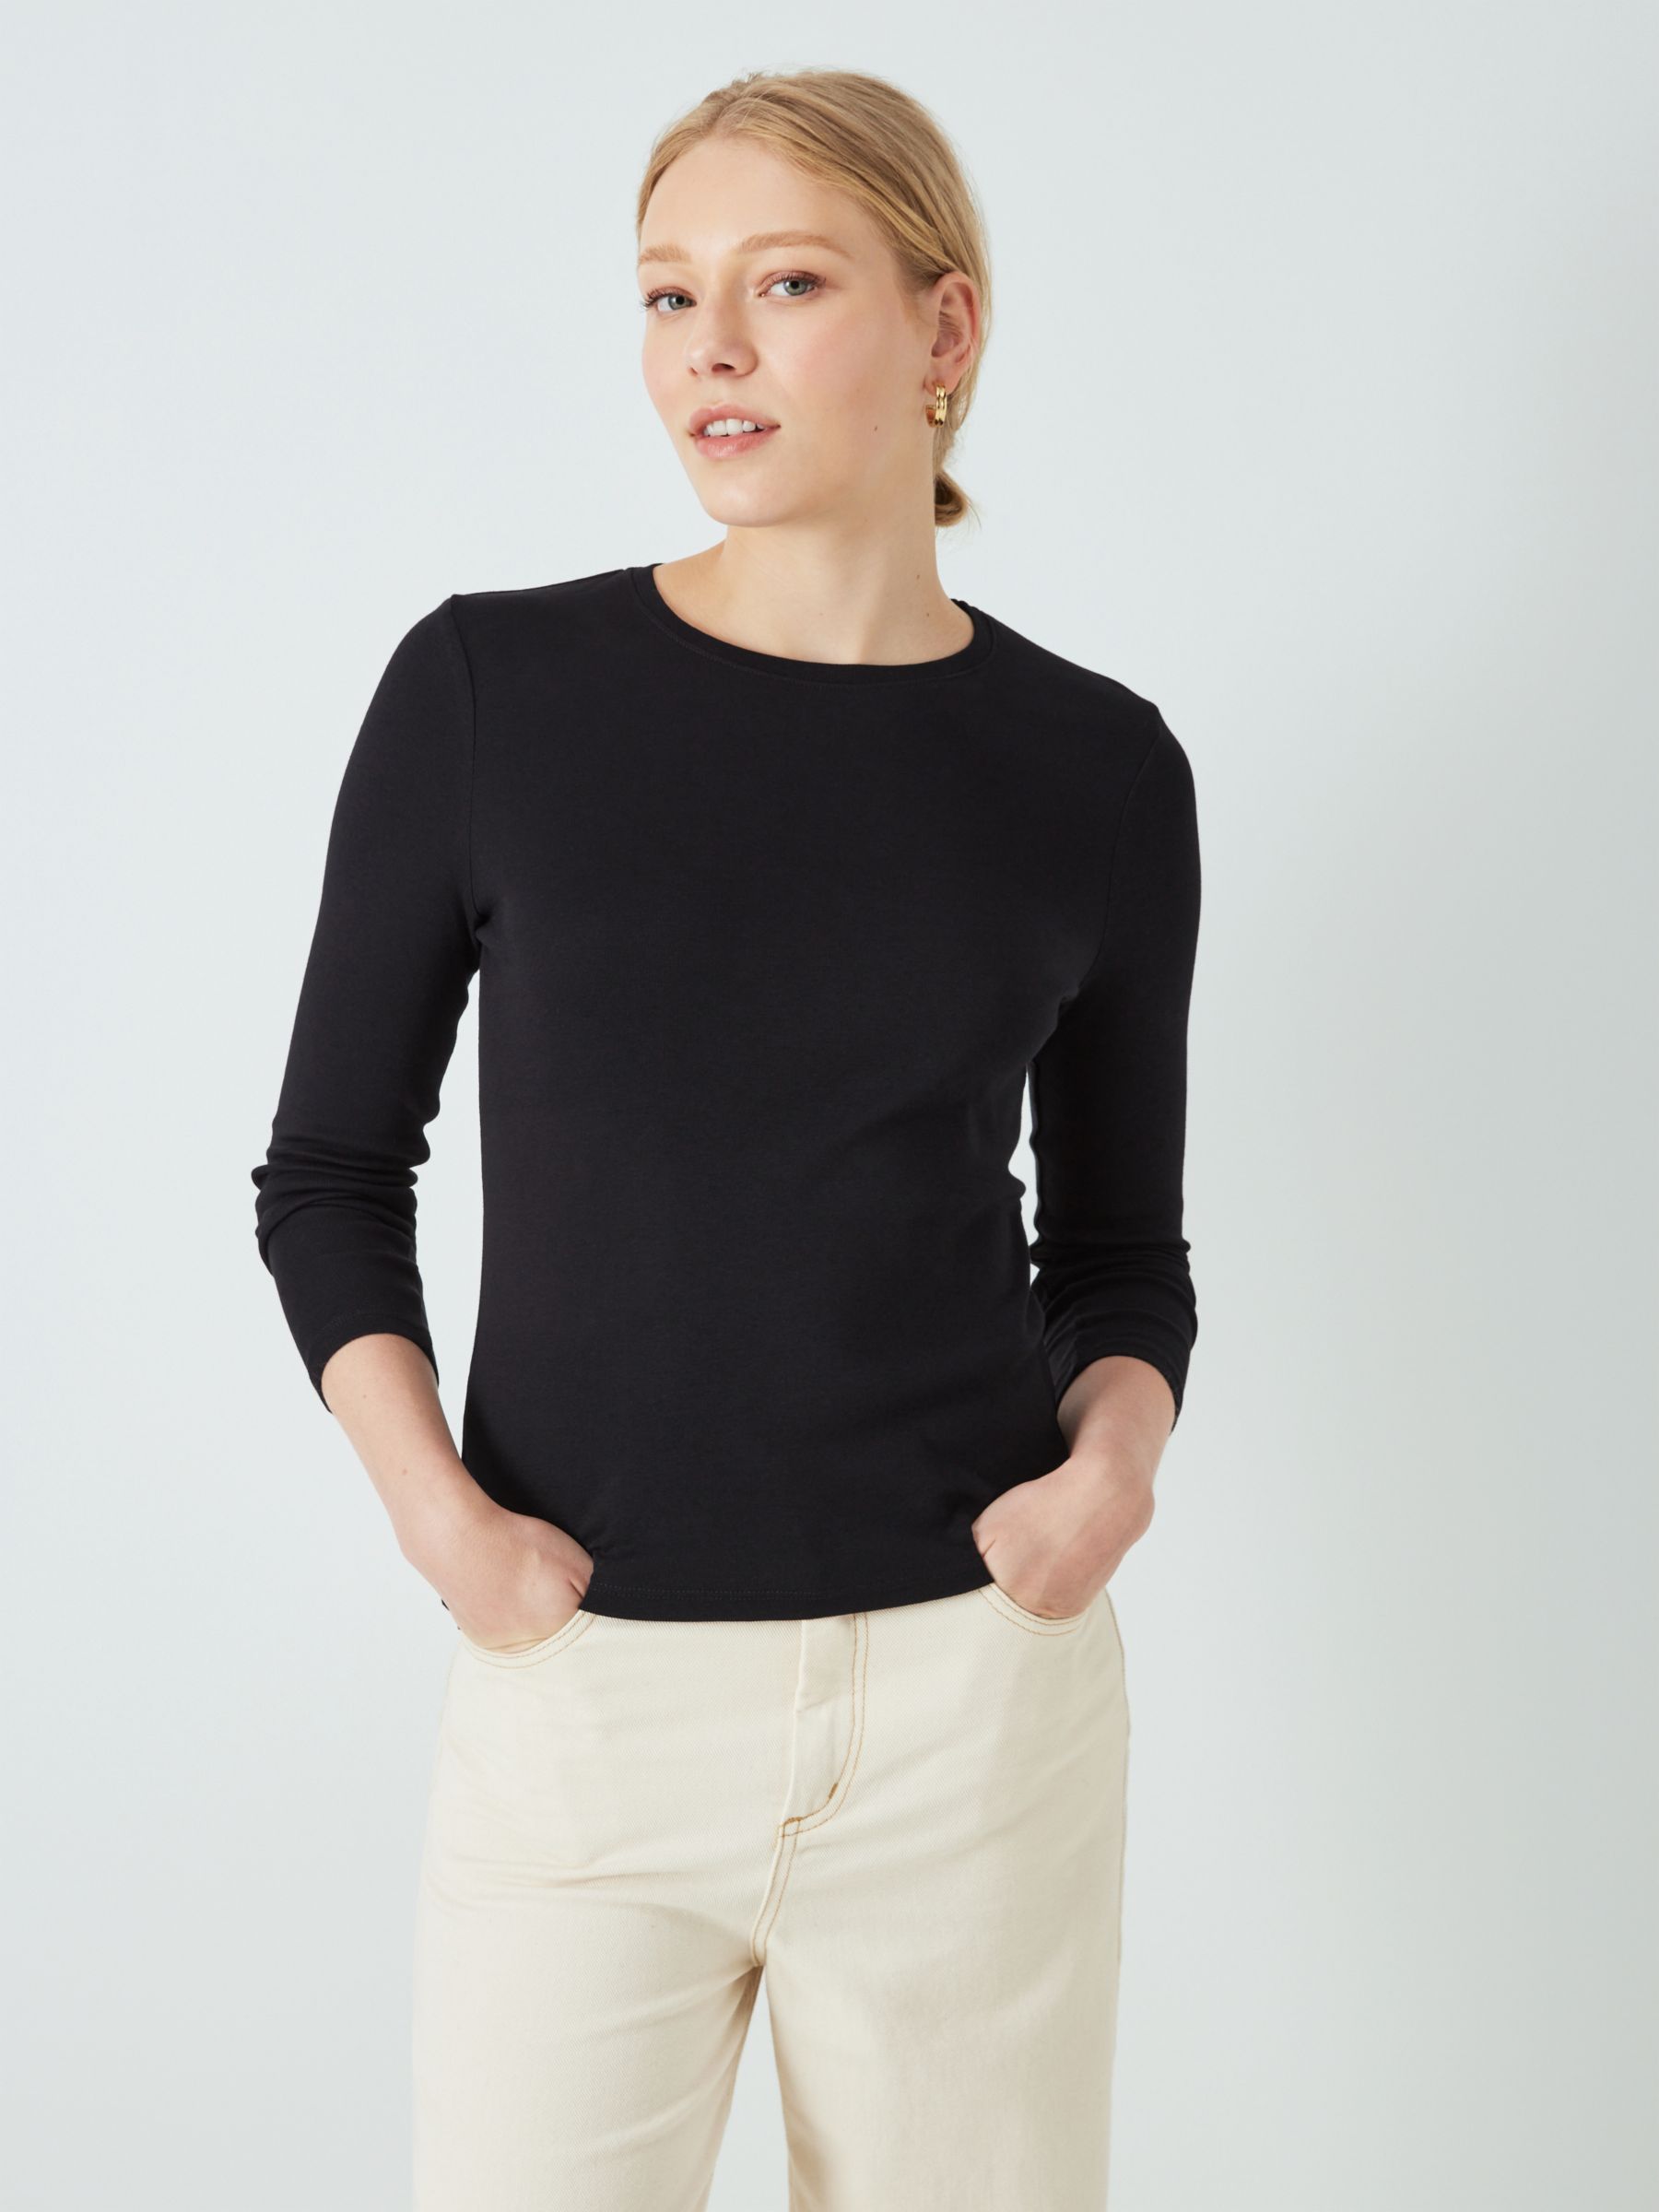 Women's Black Long Sleeve Shirts & Tops